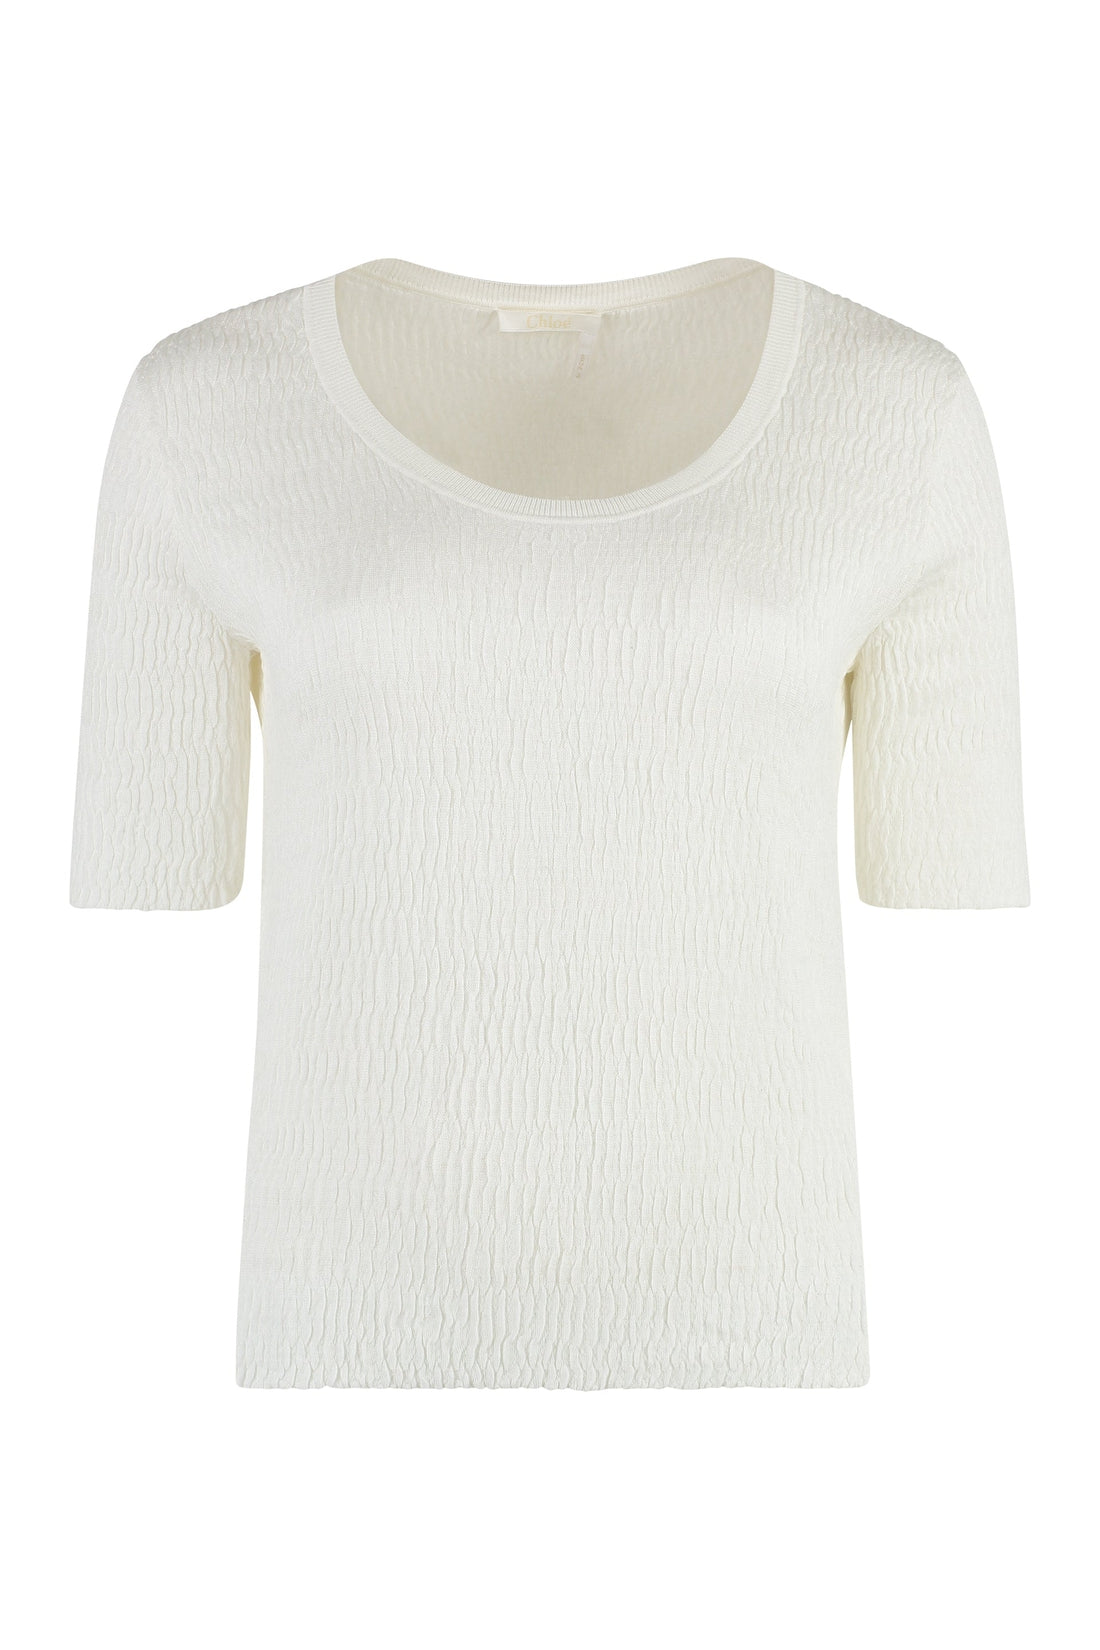 Chloé-OUTLET-SALE-Short sleeve sweater-ARCHIVIST